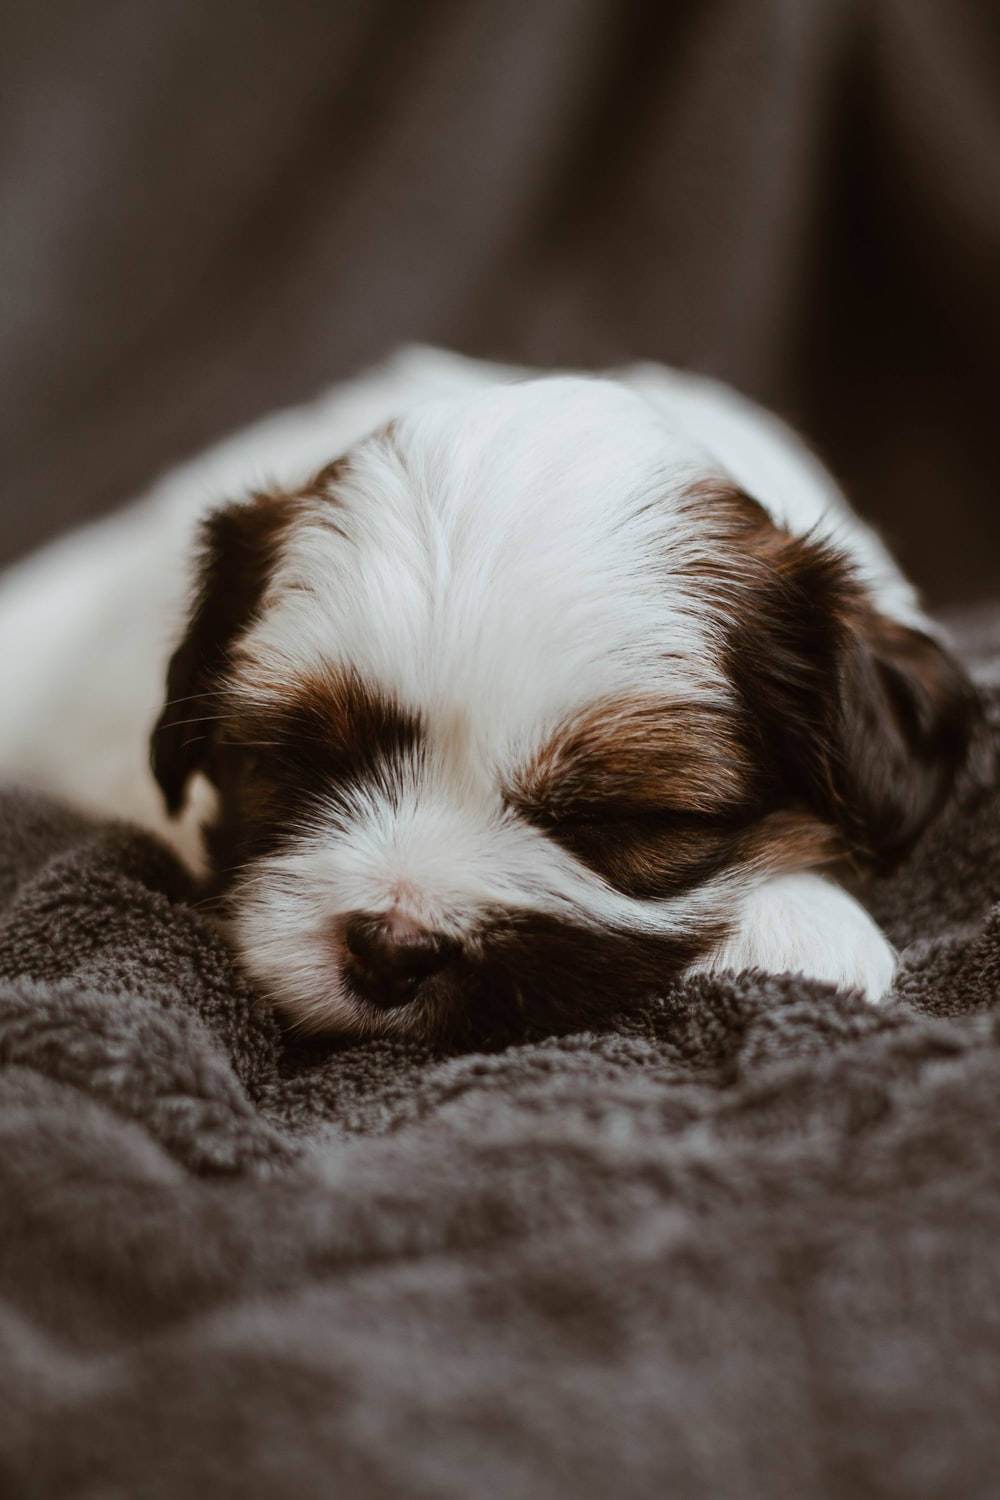 Sleeping Dog In Grey Blanket Background